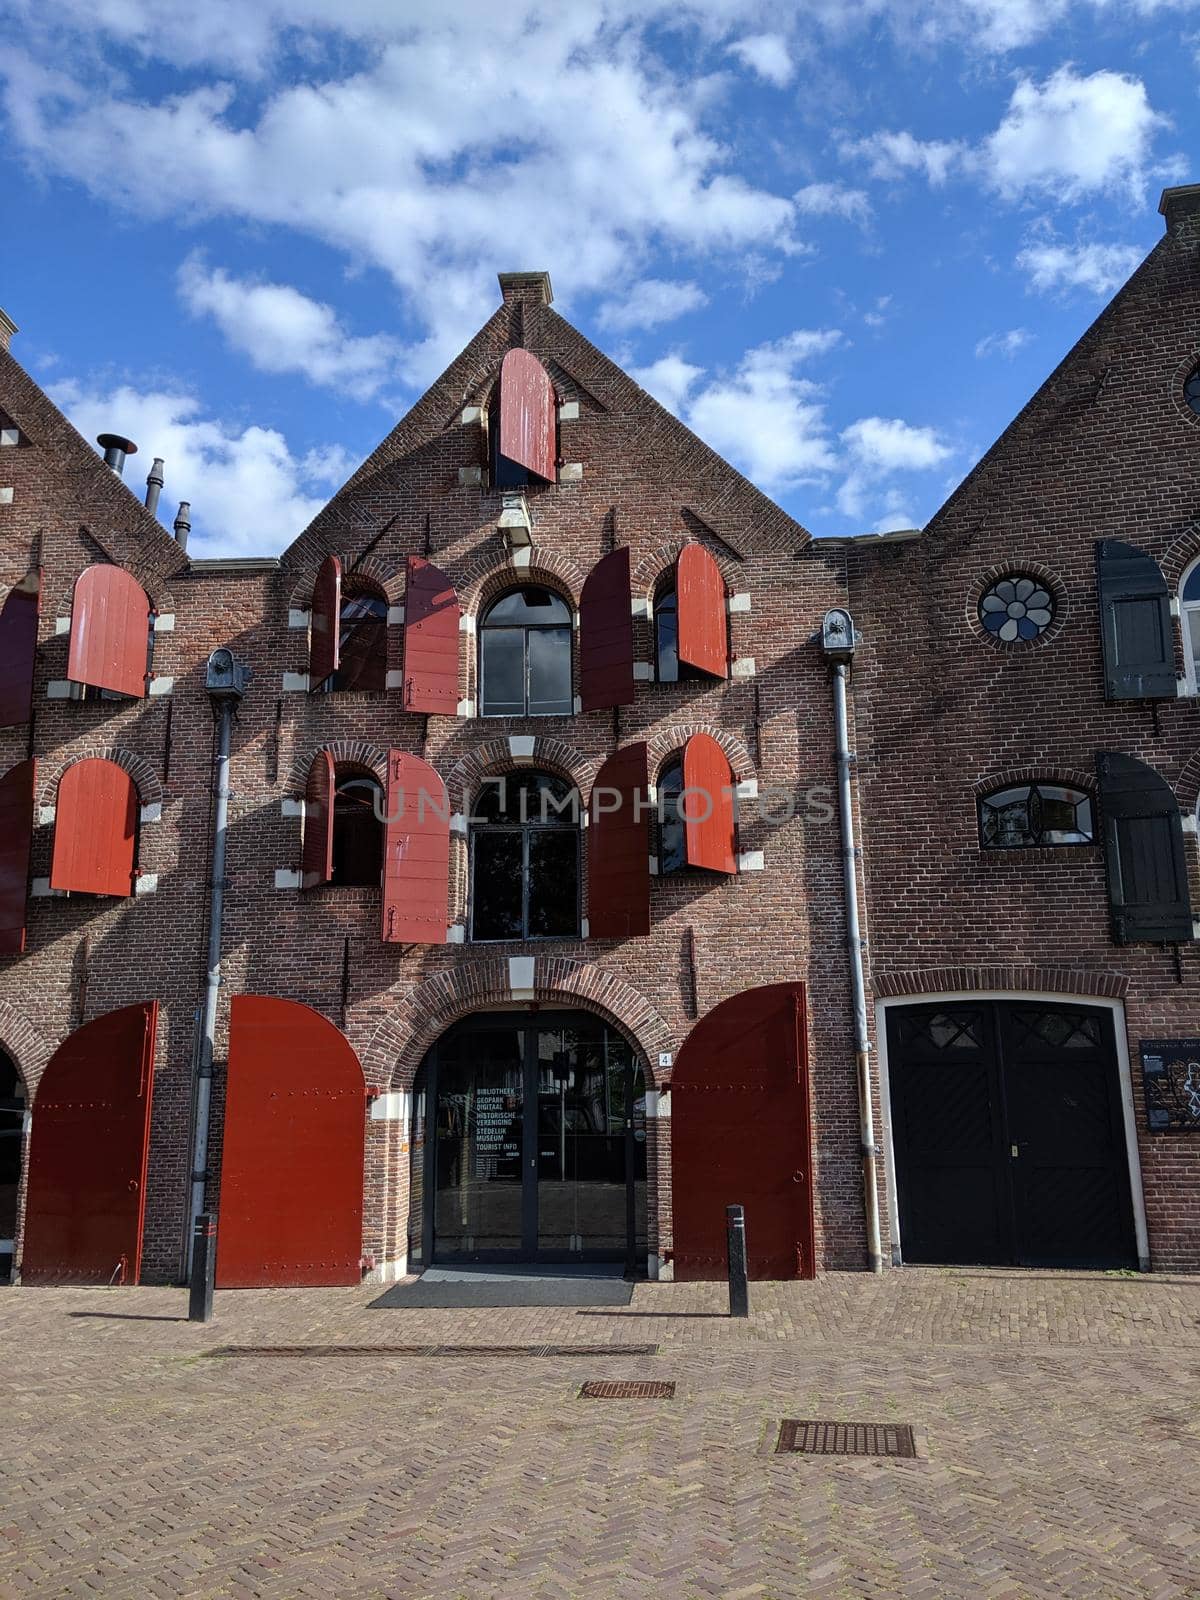 Historical building in Coevorden, The Netherlands